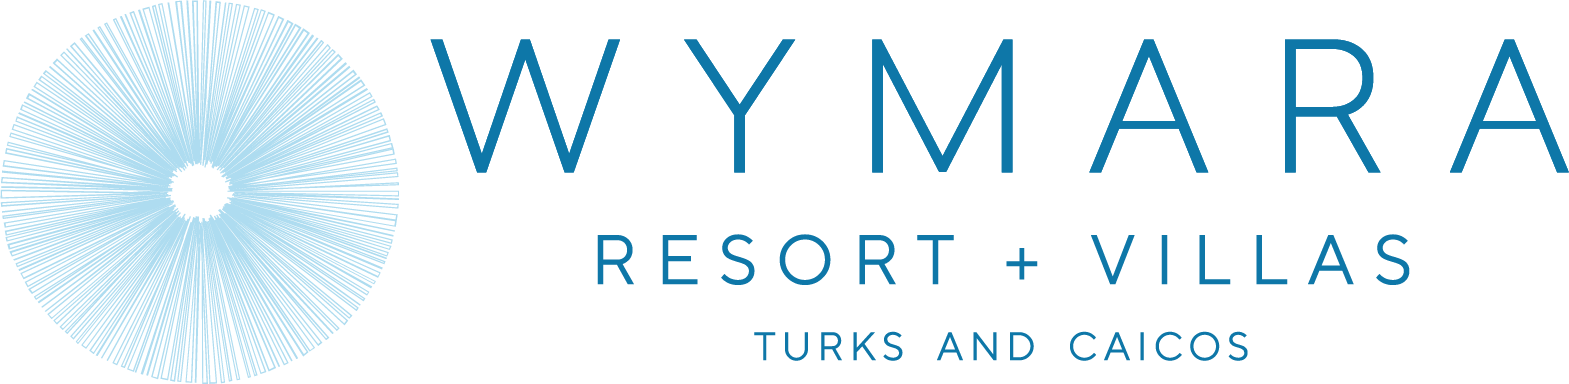 Wymara Resort + Villas, Turks and Caicos